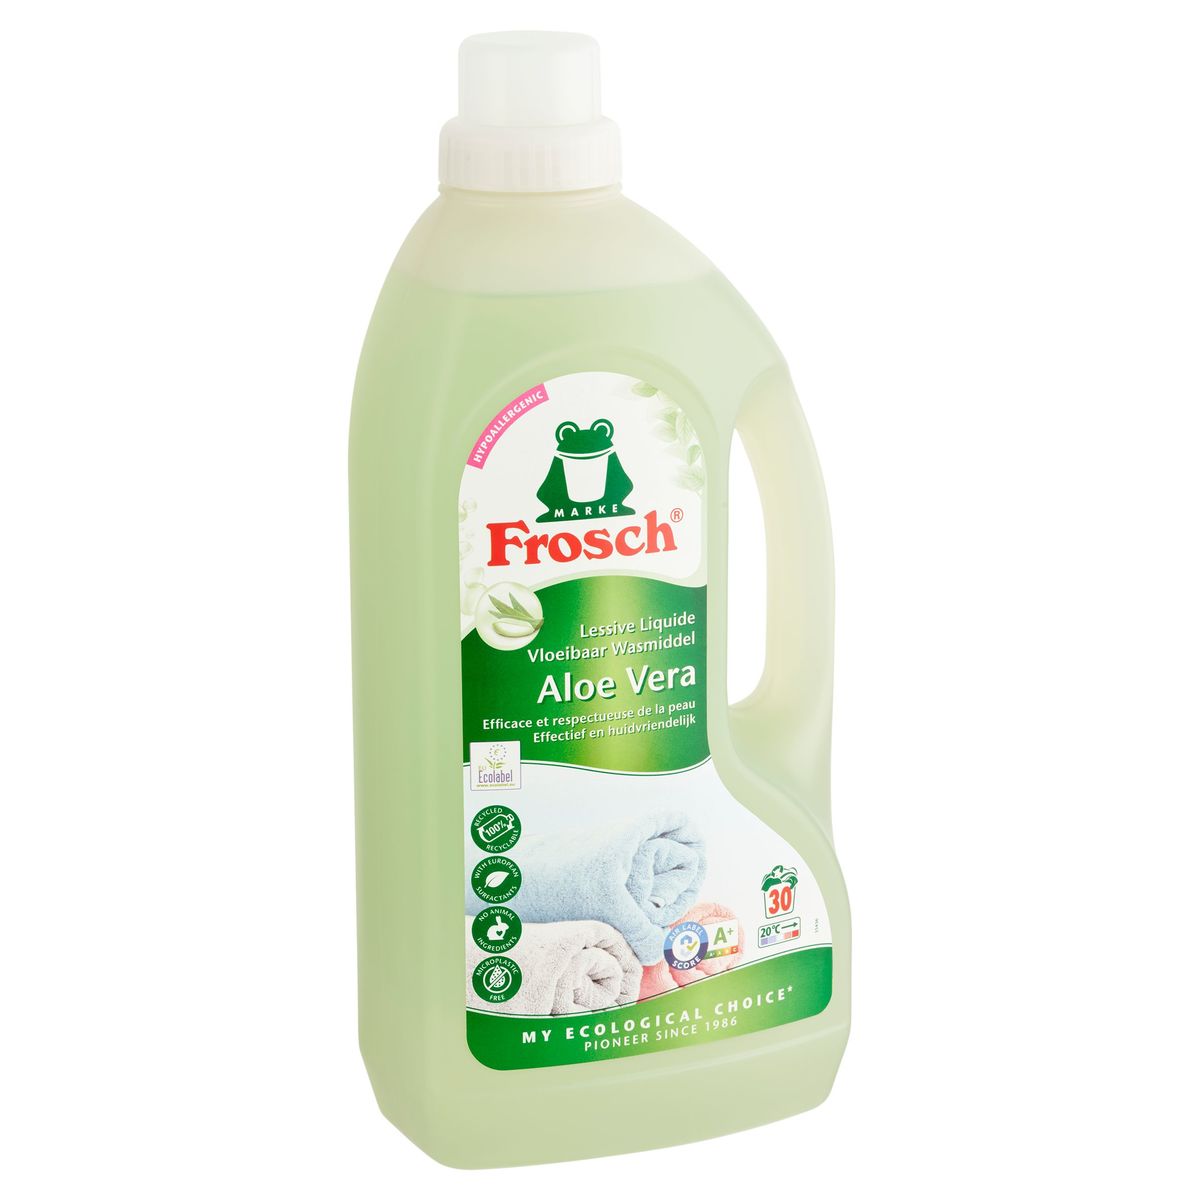 Frosch Ecological Lessive Liquide Aloe Vera 1.5 L 30 Lavages